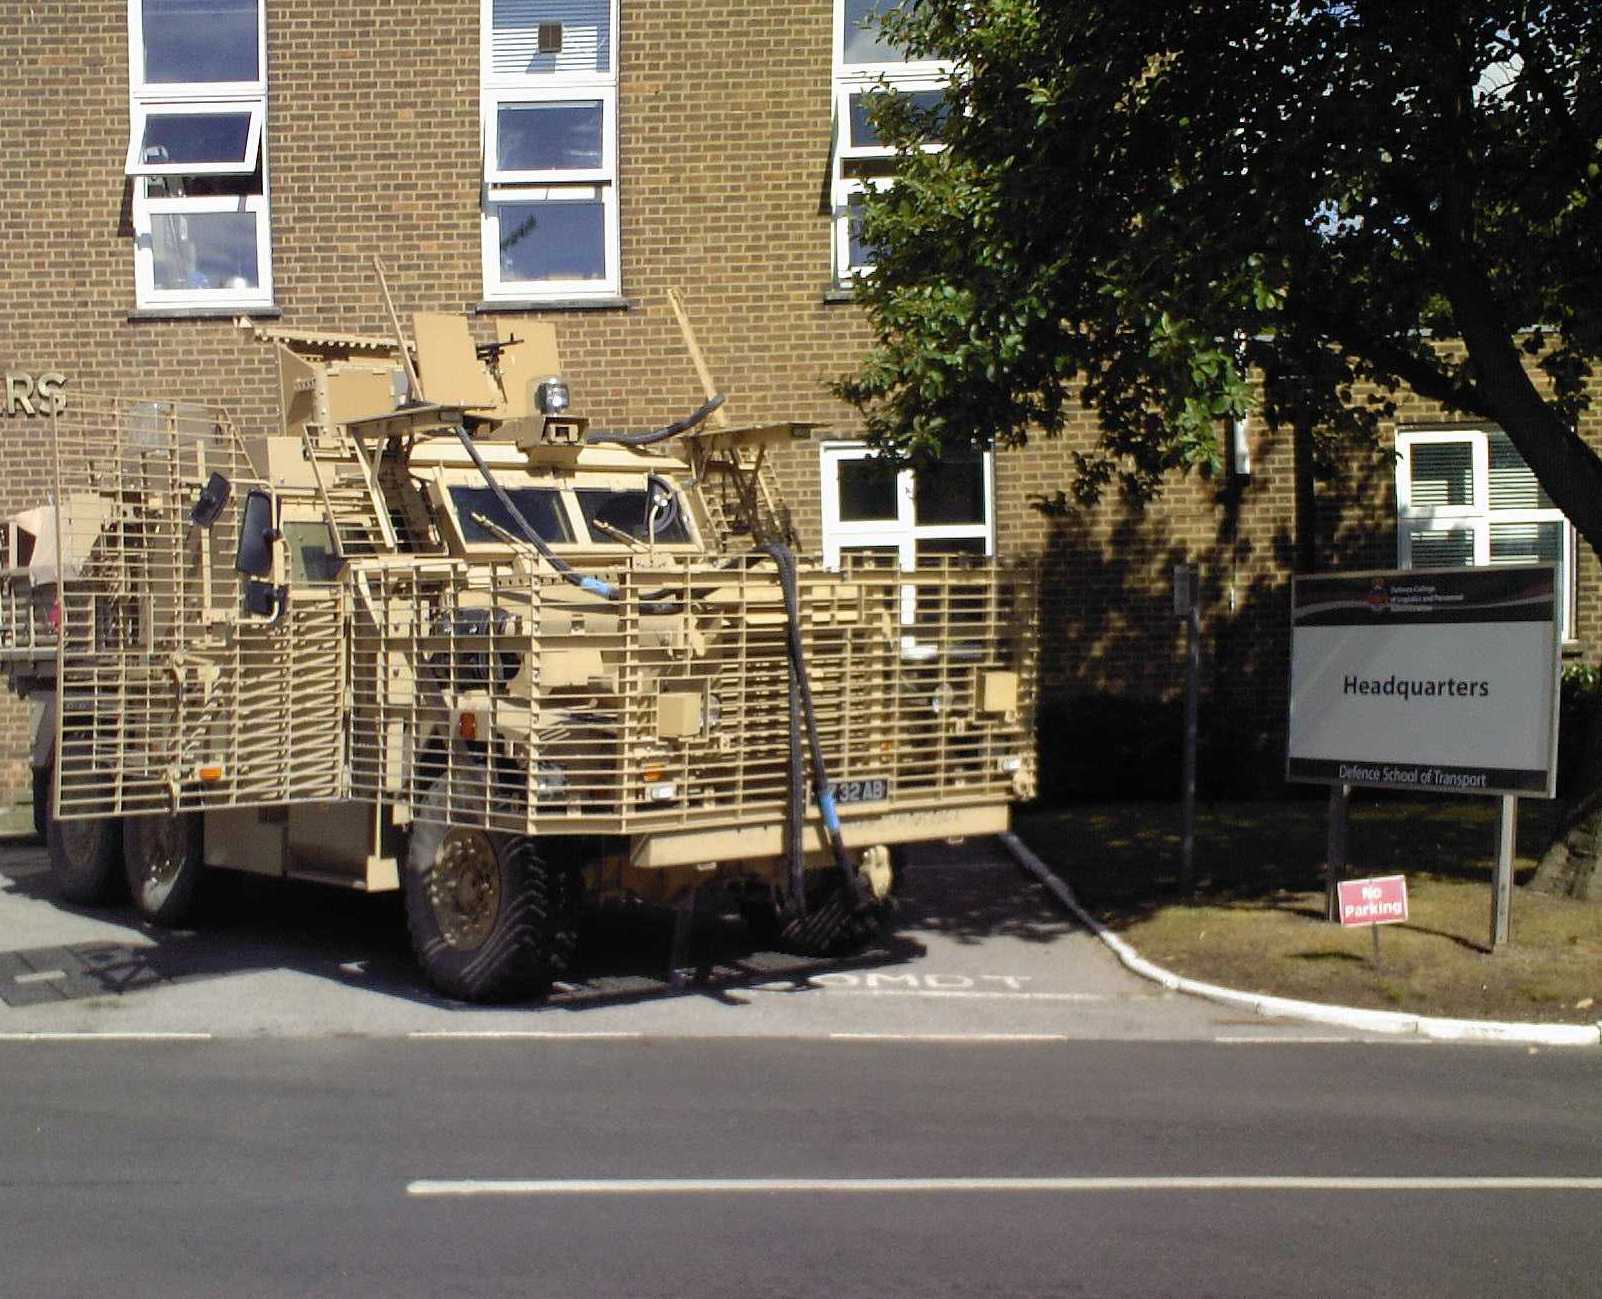 Defence School of Transport